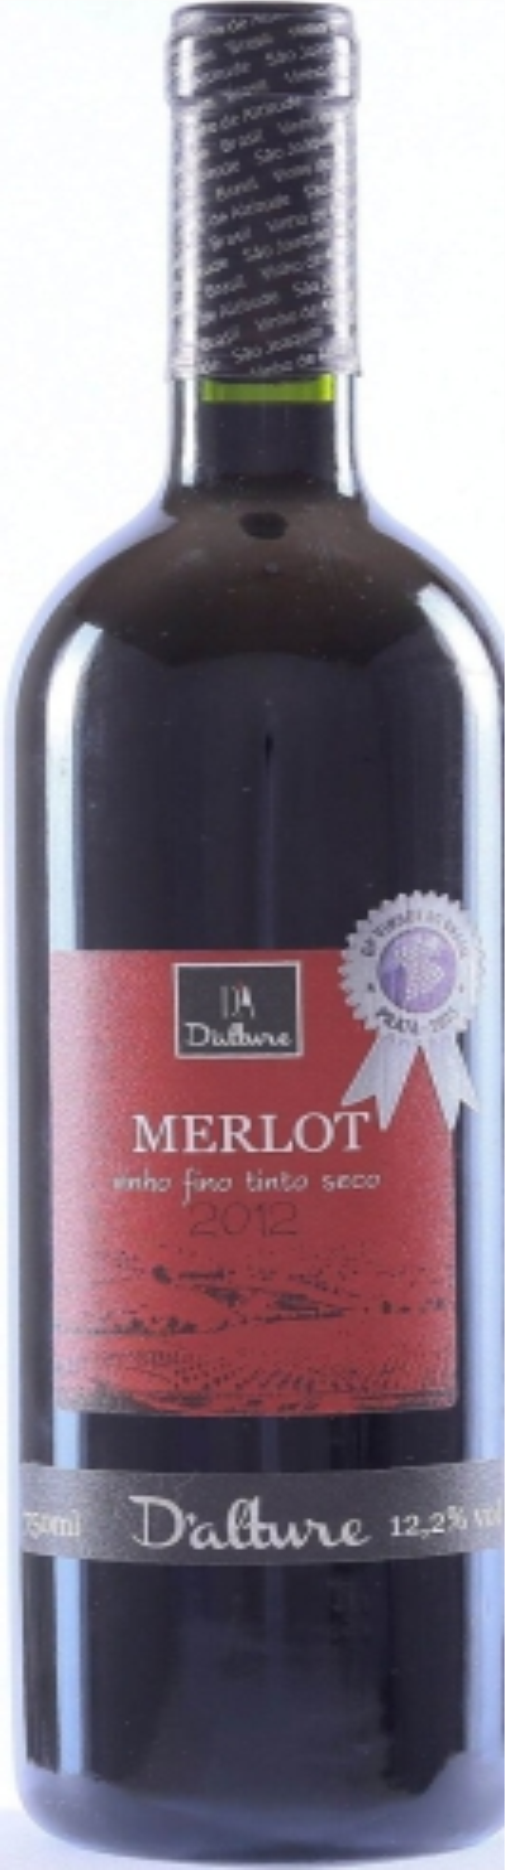 Vinho Tinto Merlot Dalture